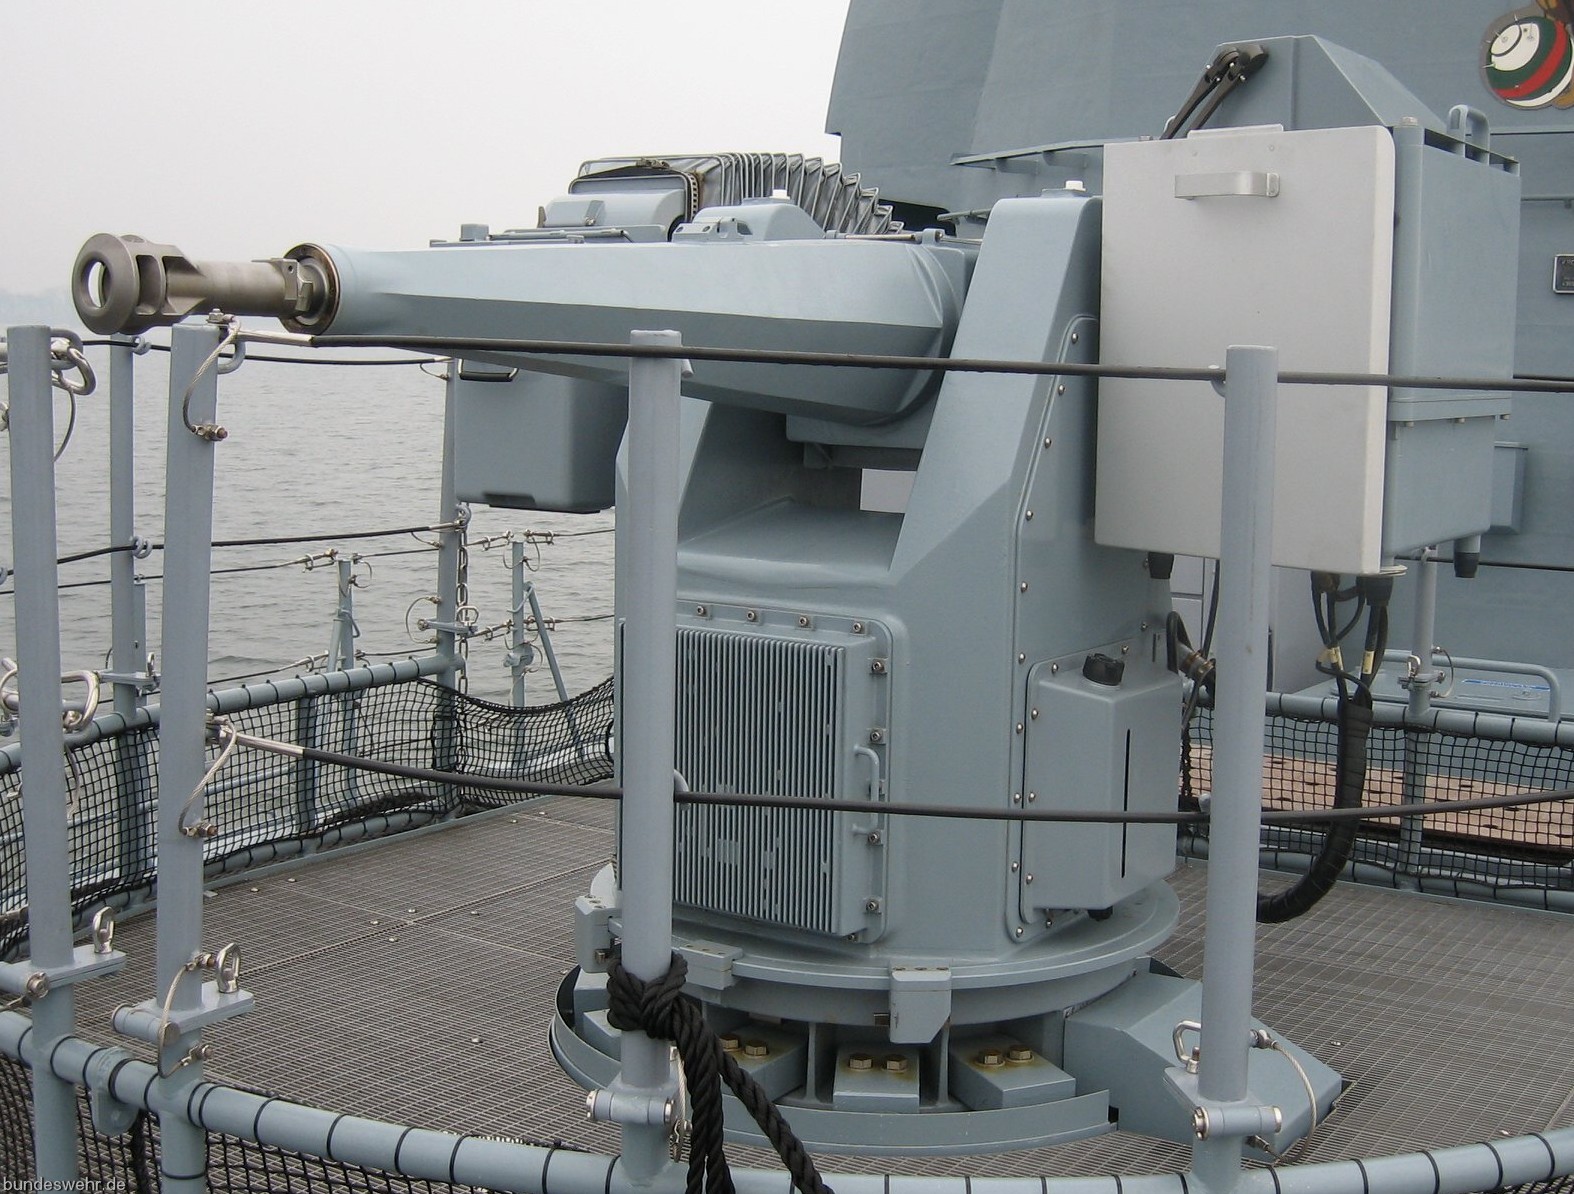 mlg-27 machine gun system remote controlled 27mm rheinmetall mauser 11